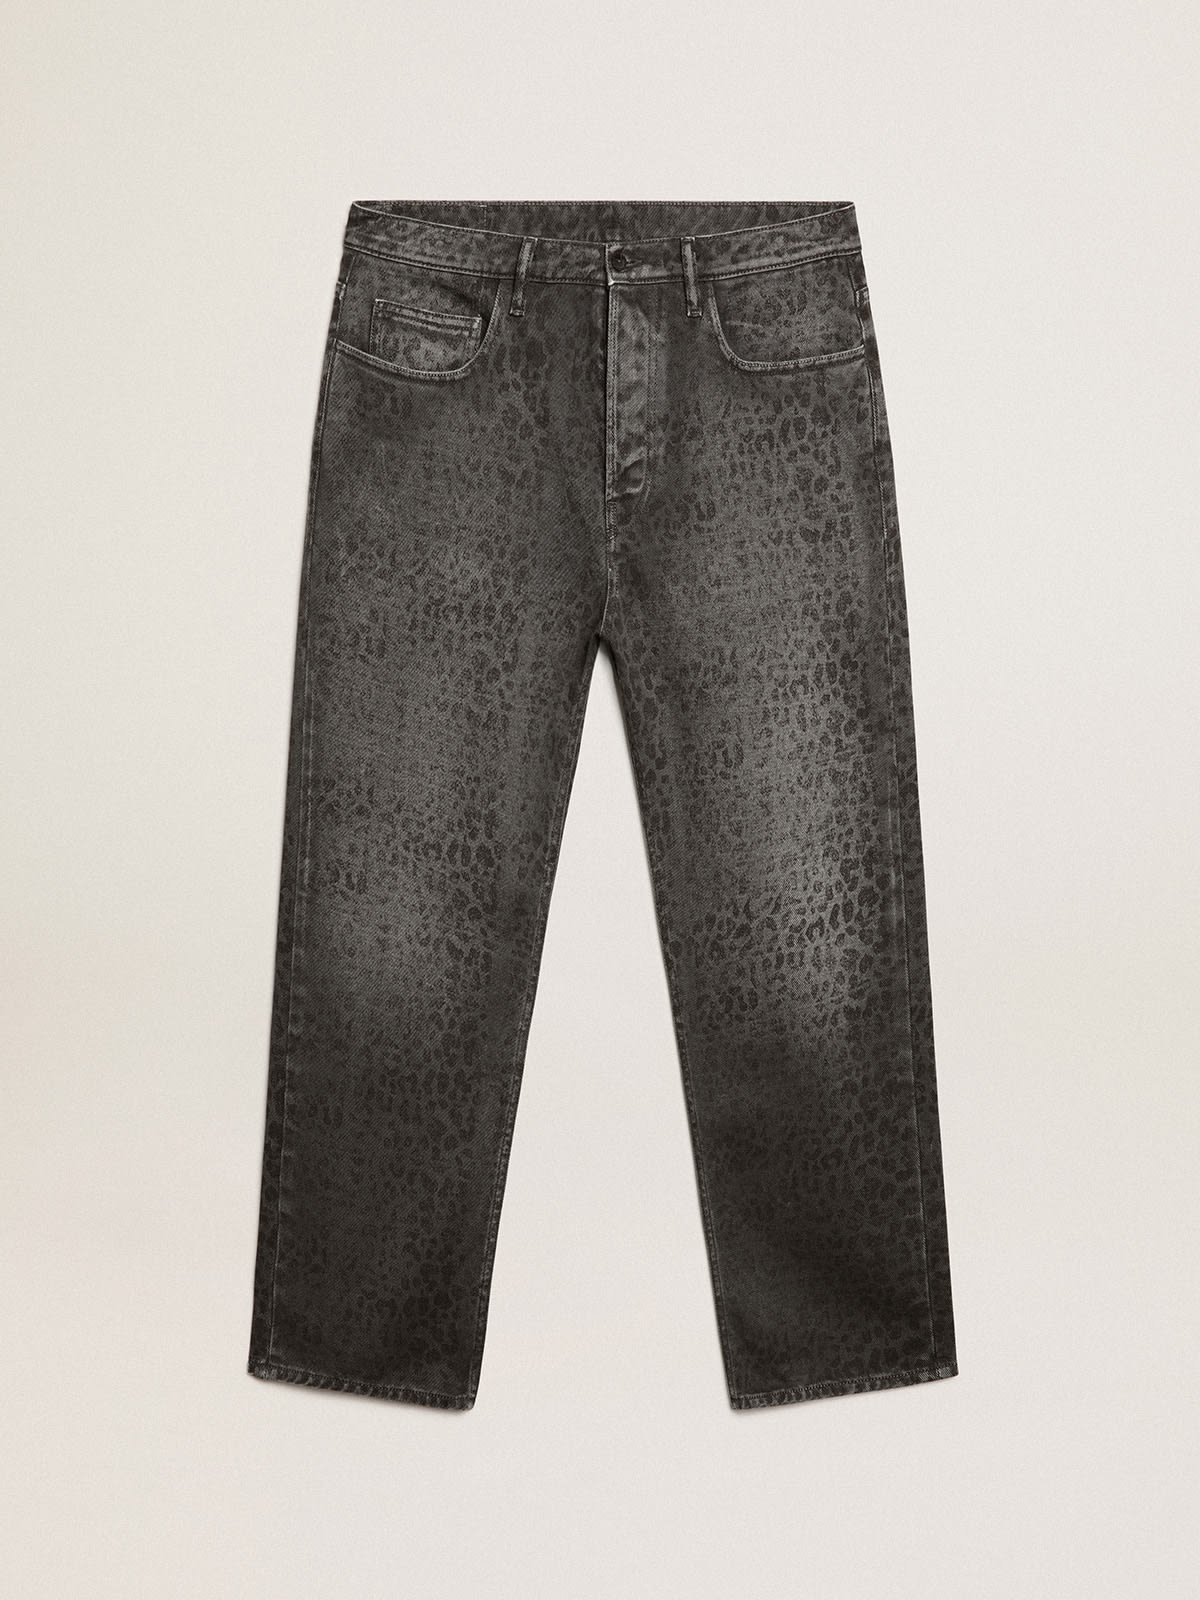 Golden Goose - Men’s gray jeans with leopard print in 